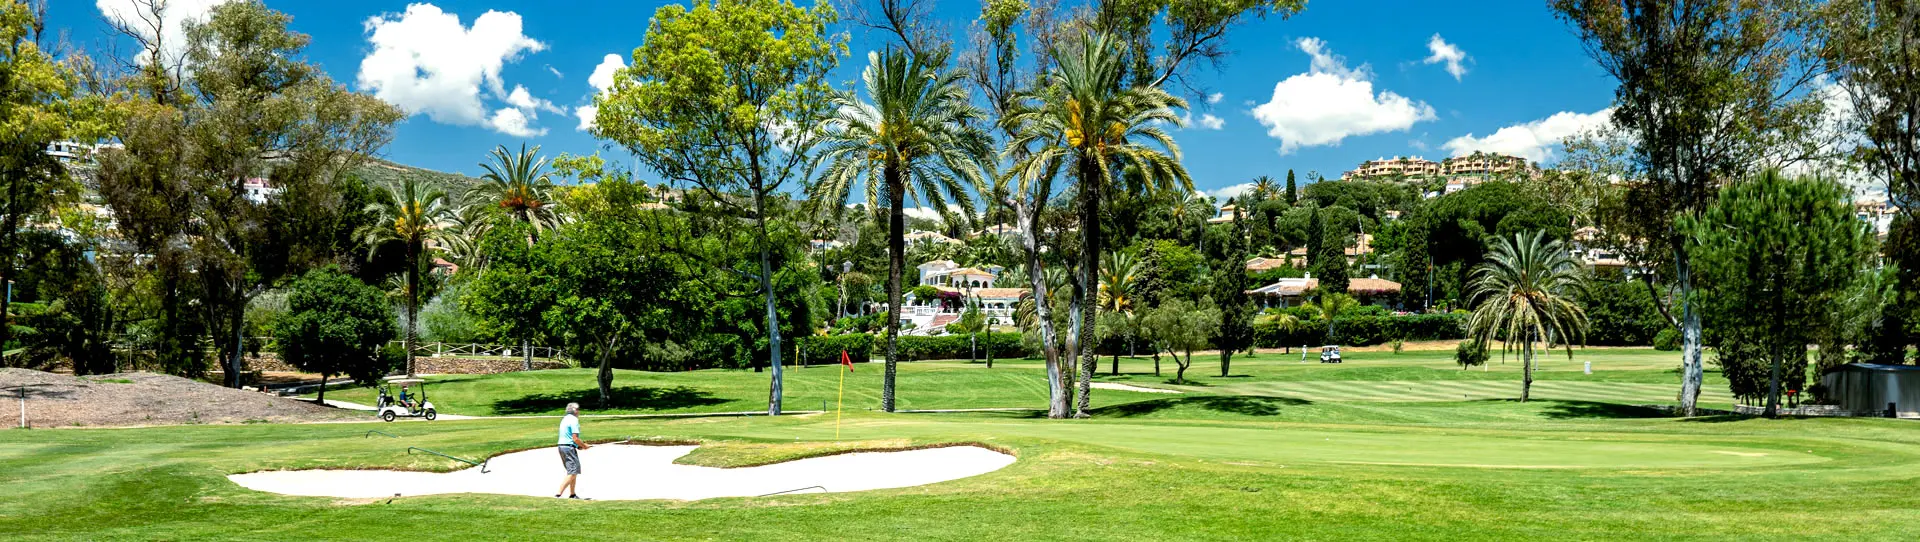 Spain golf holidays - Marbella & Malaga Experience - Photo 3